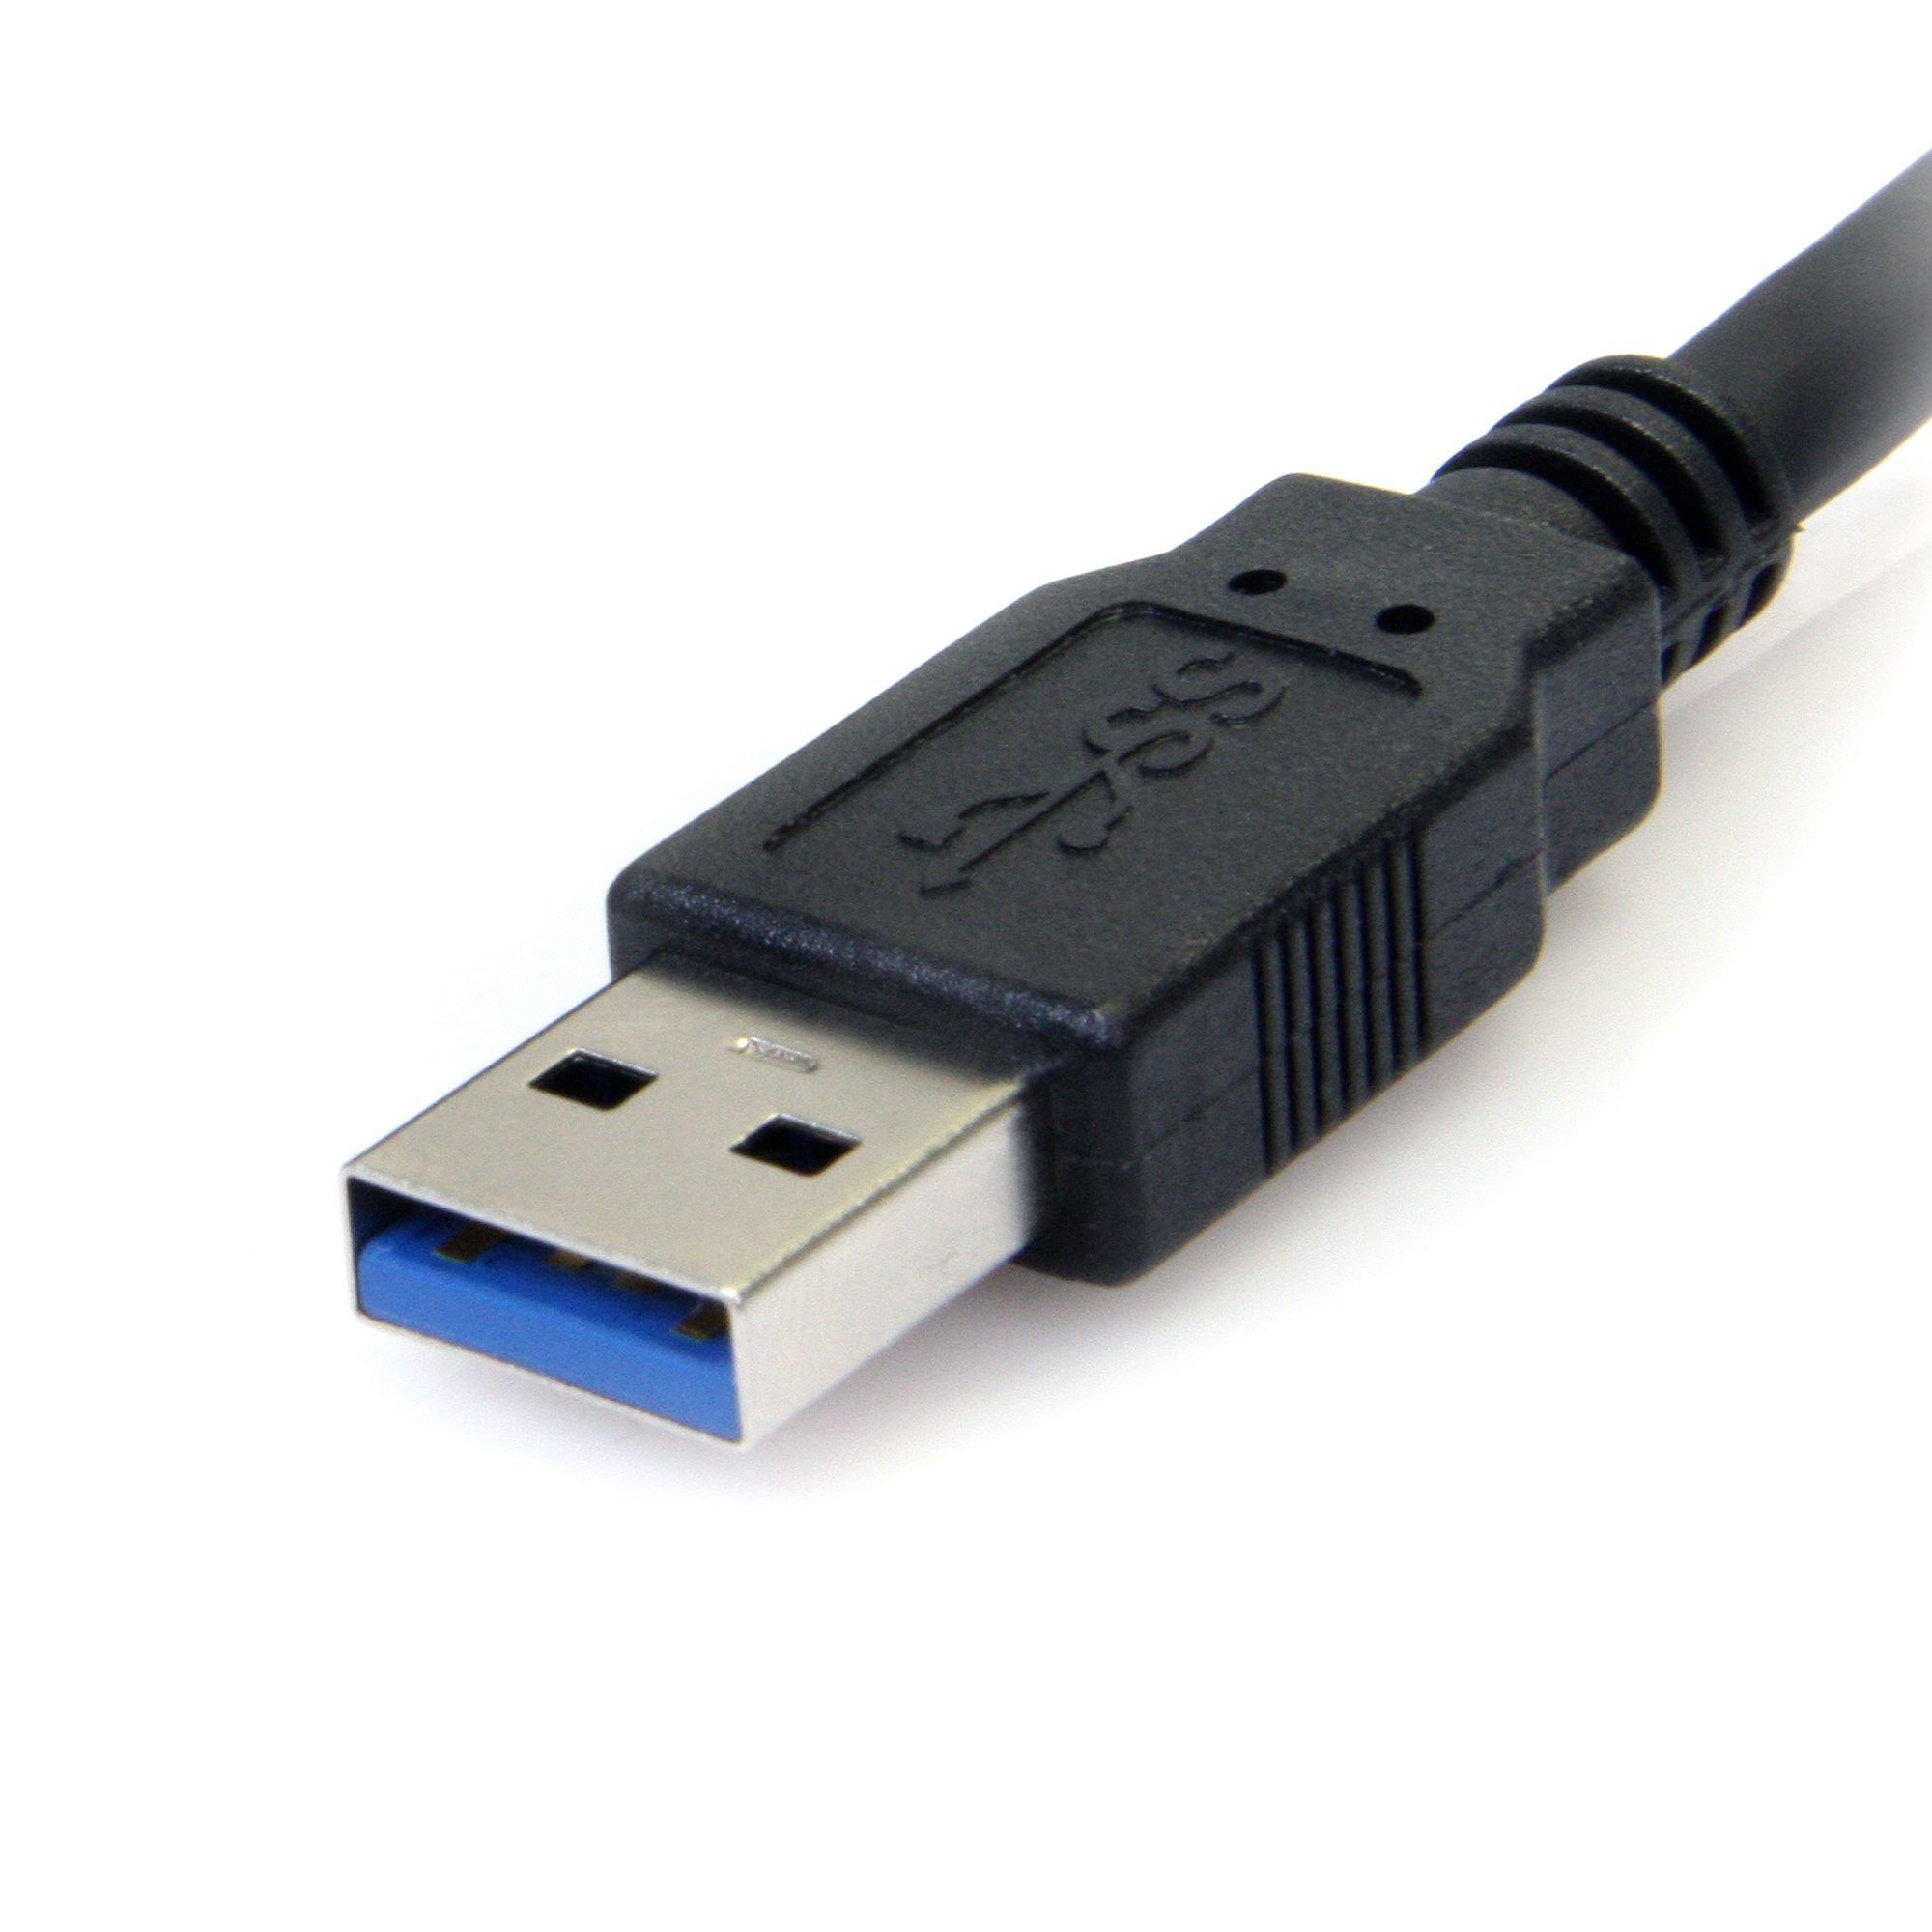 Кабель USB 3.0 SUPERSPEED USB 3.0. USB 3.0 Type b(m) угловой. USB 3.0 Cable Micro-b винт. Кабель USB 3.0 Micro USB 90 градусов. Usb 3.0 кабель питанием